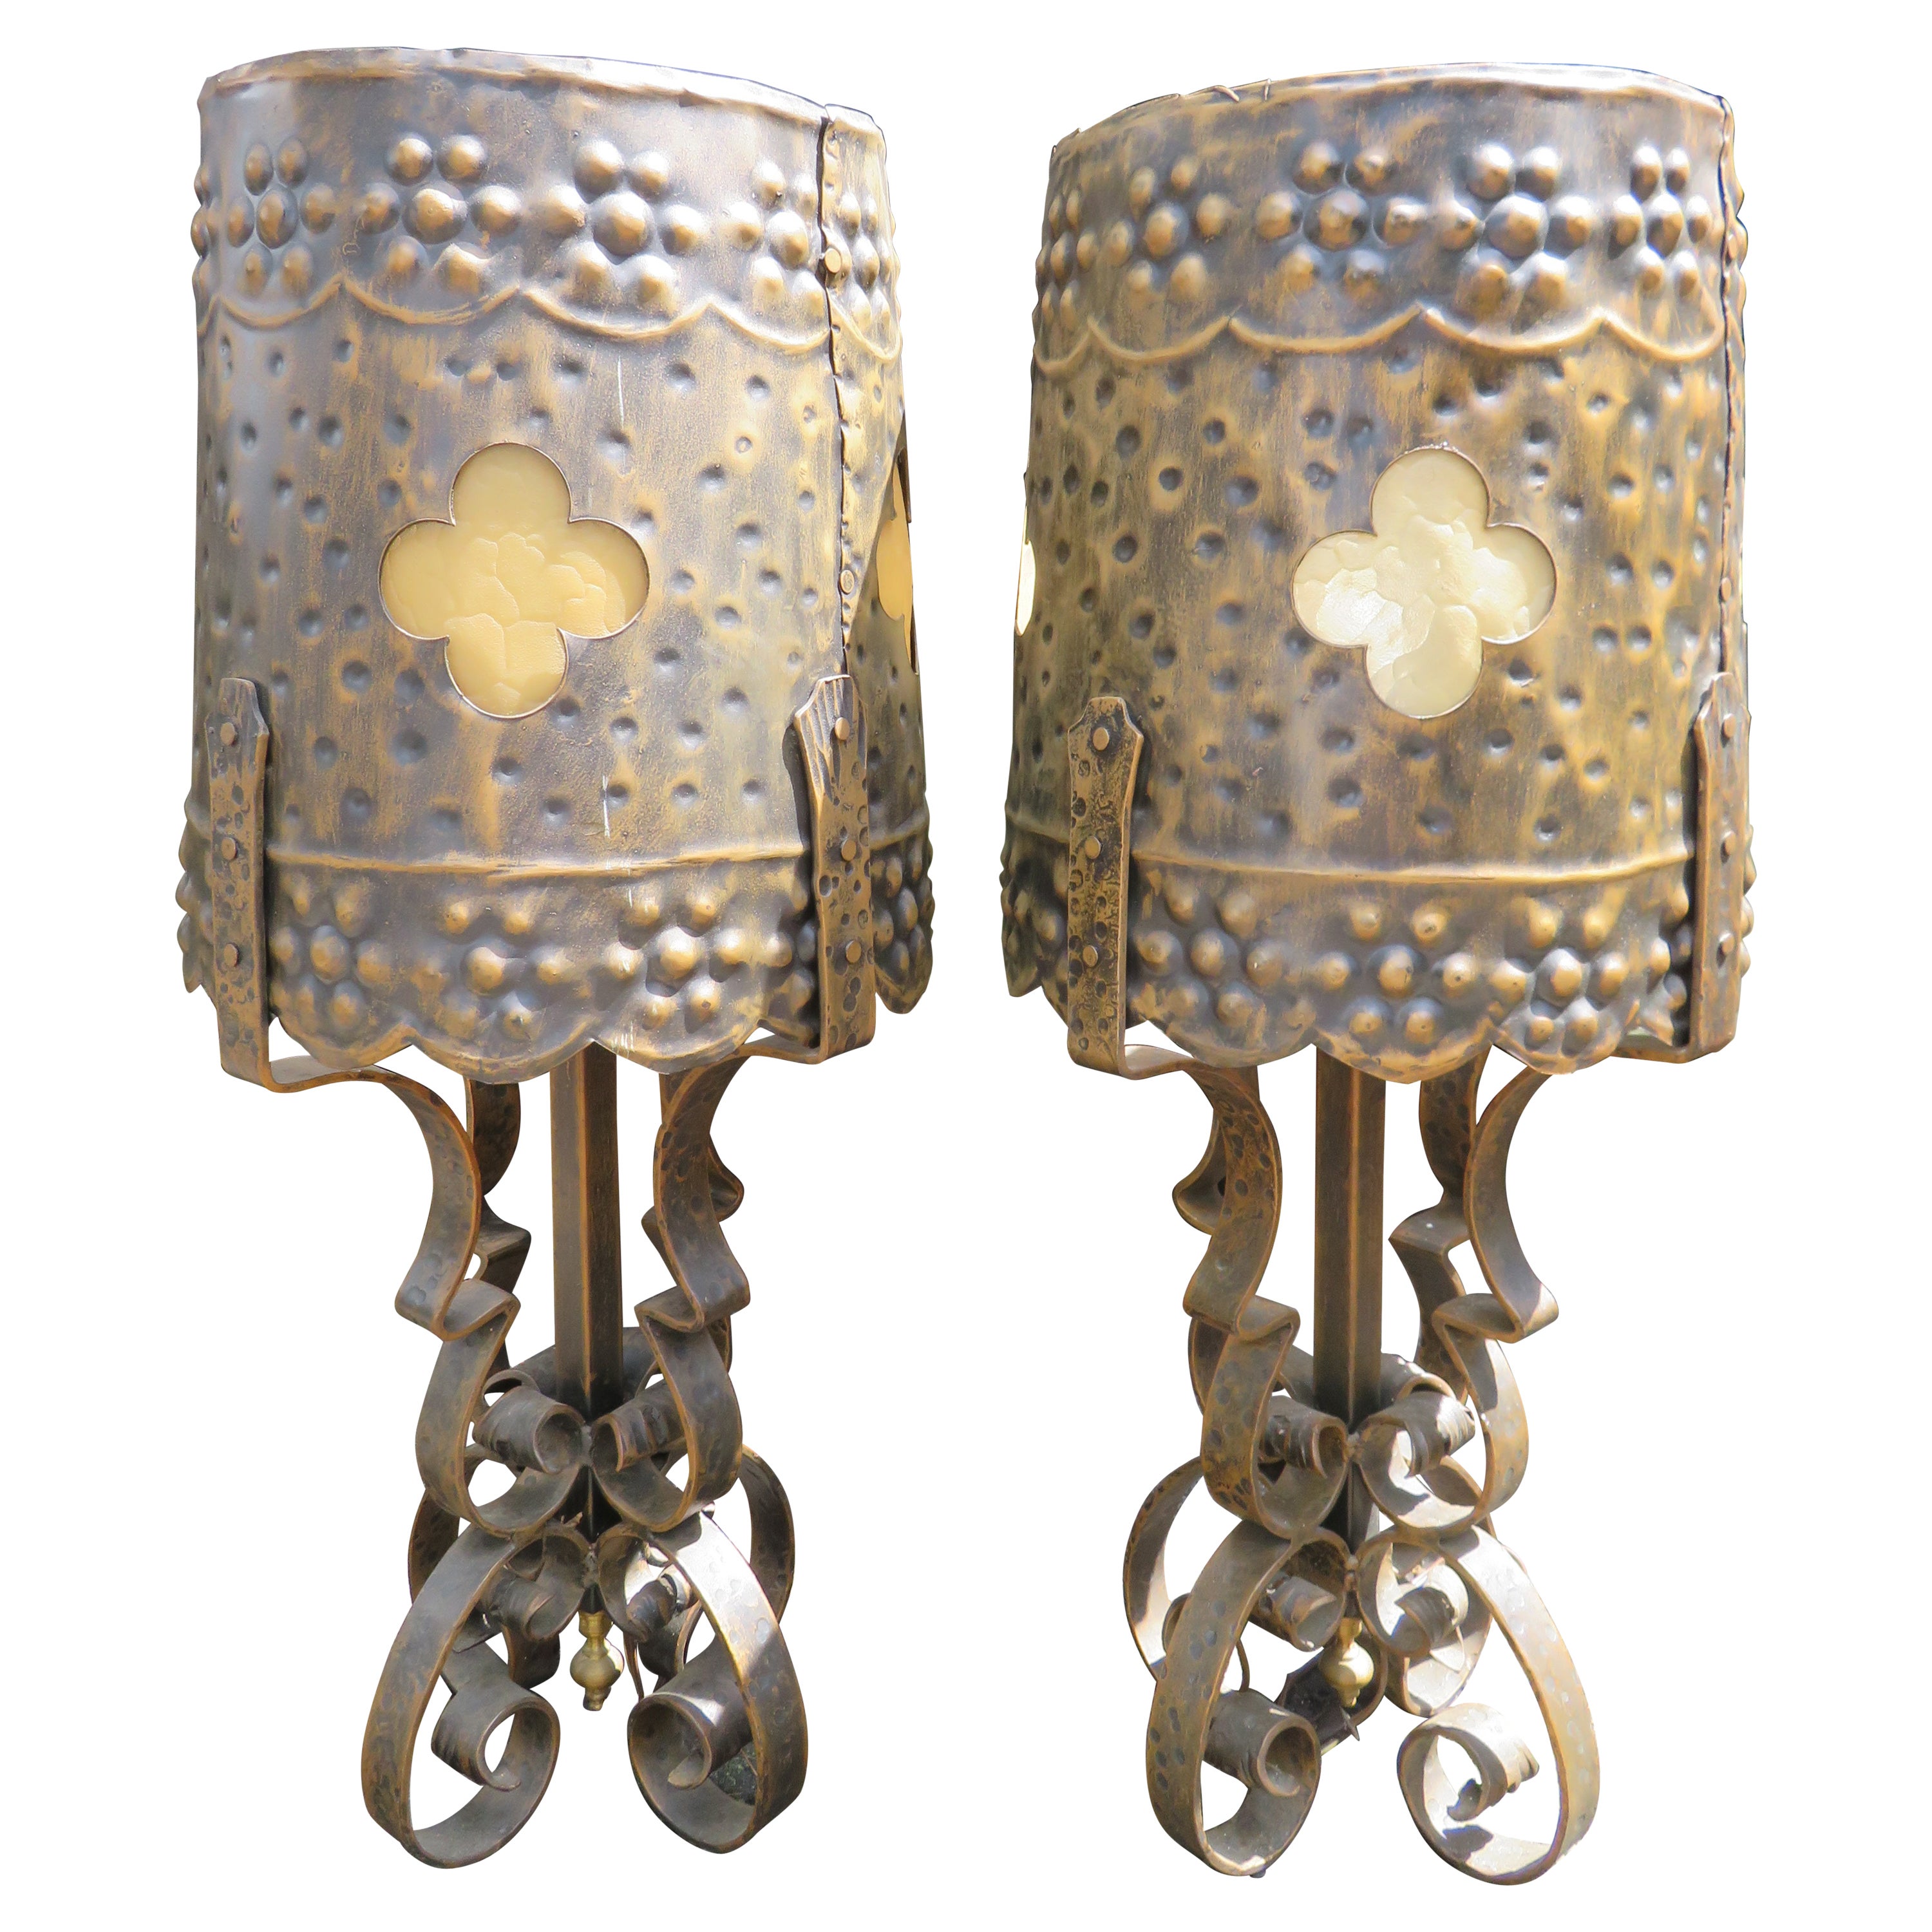 Monumentales lampes gothiques Tudor Hammered mi-siècle modernes en vente